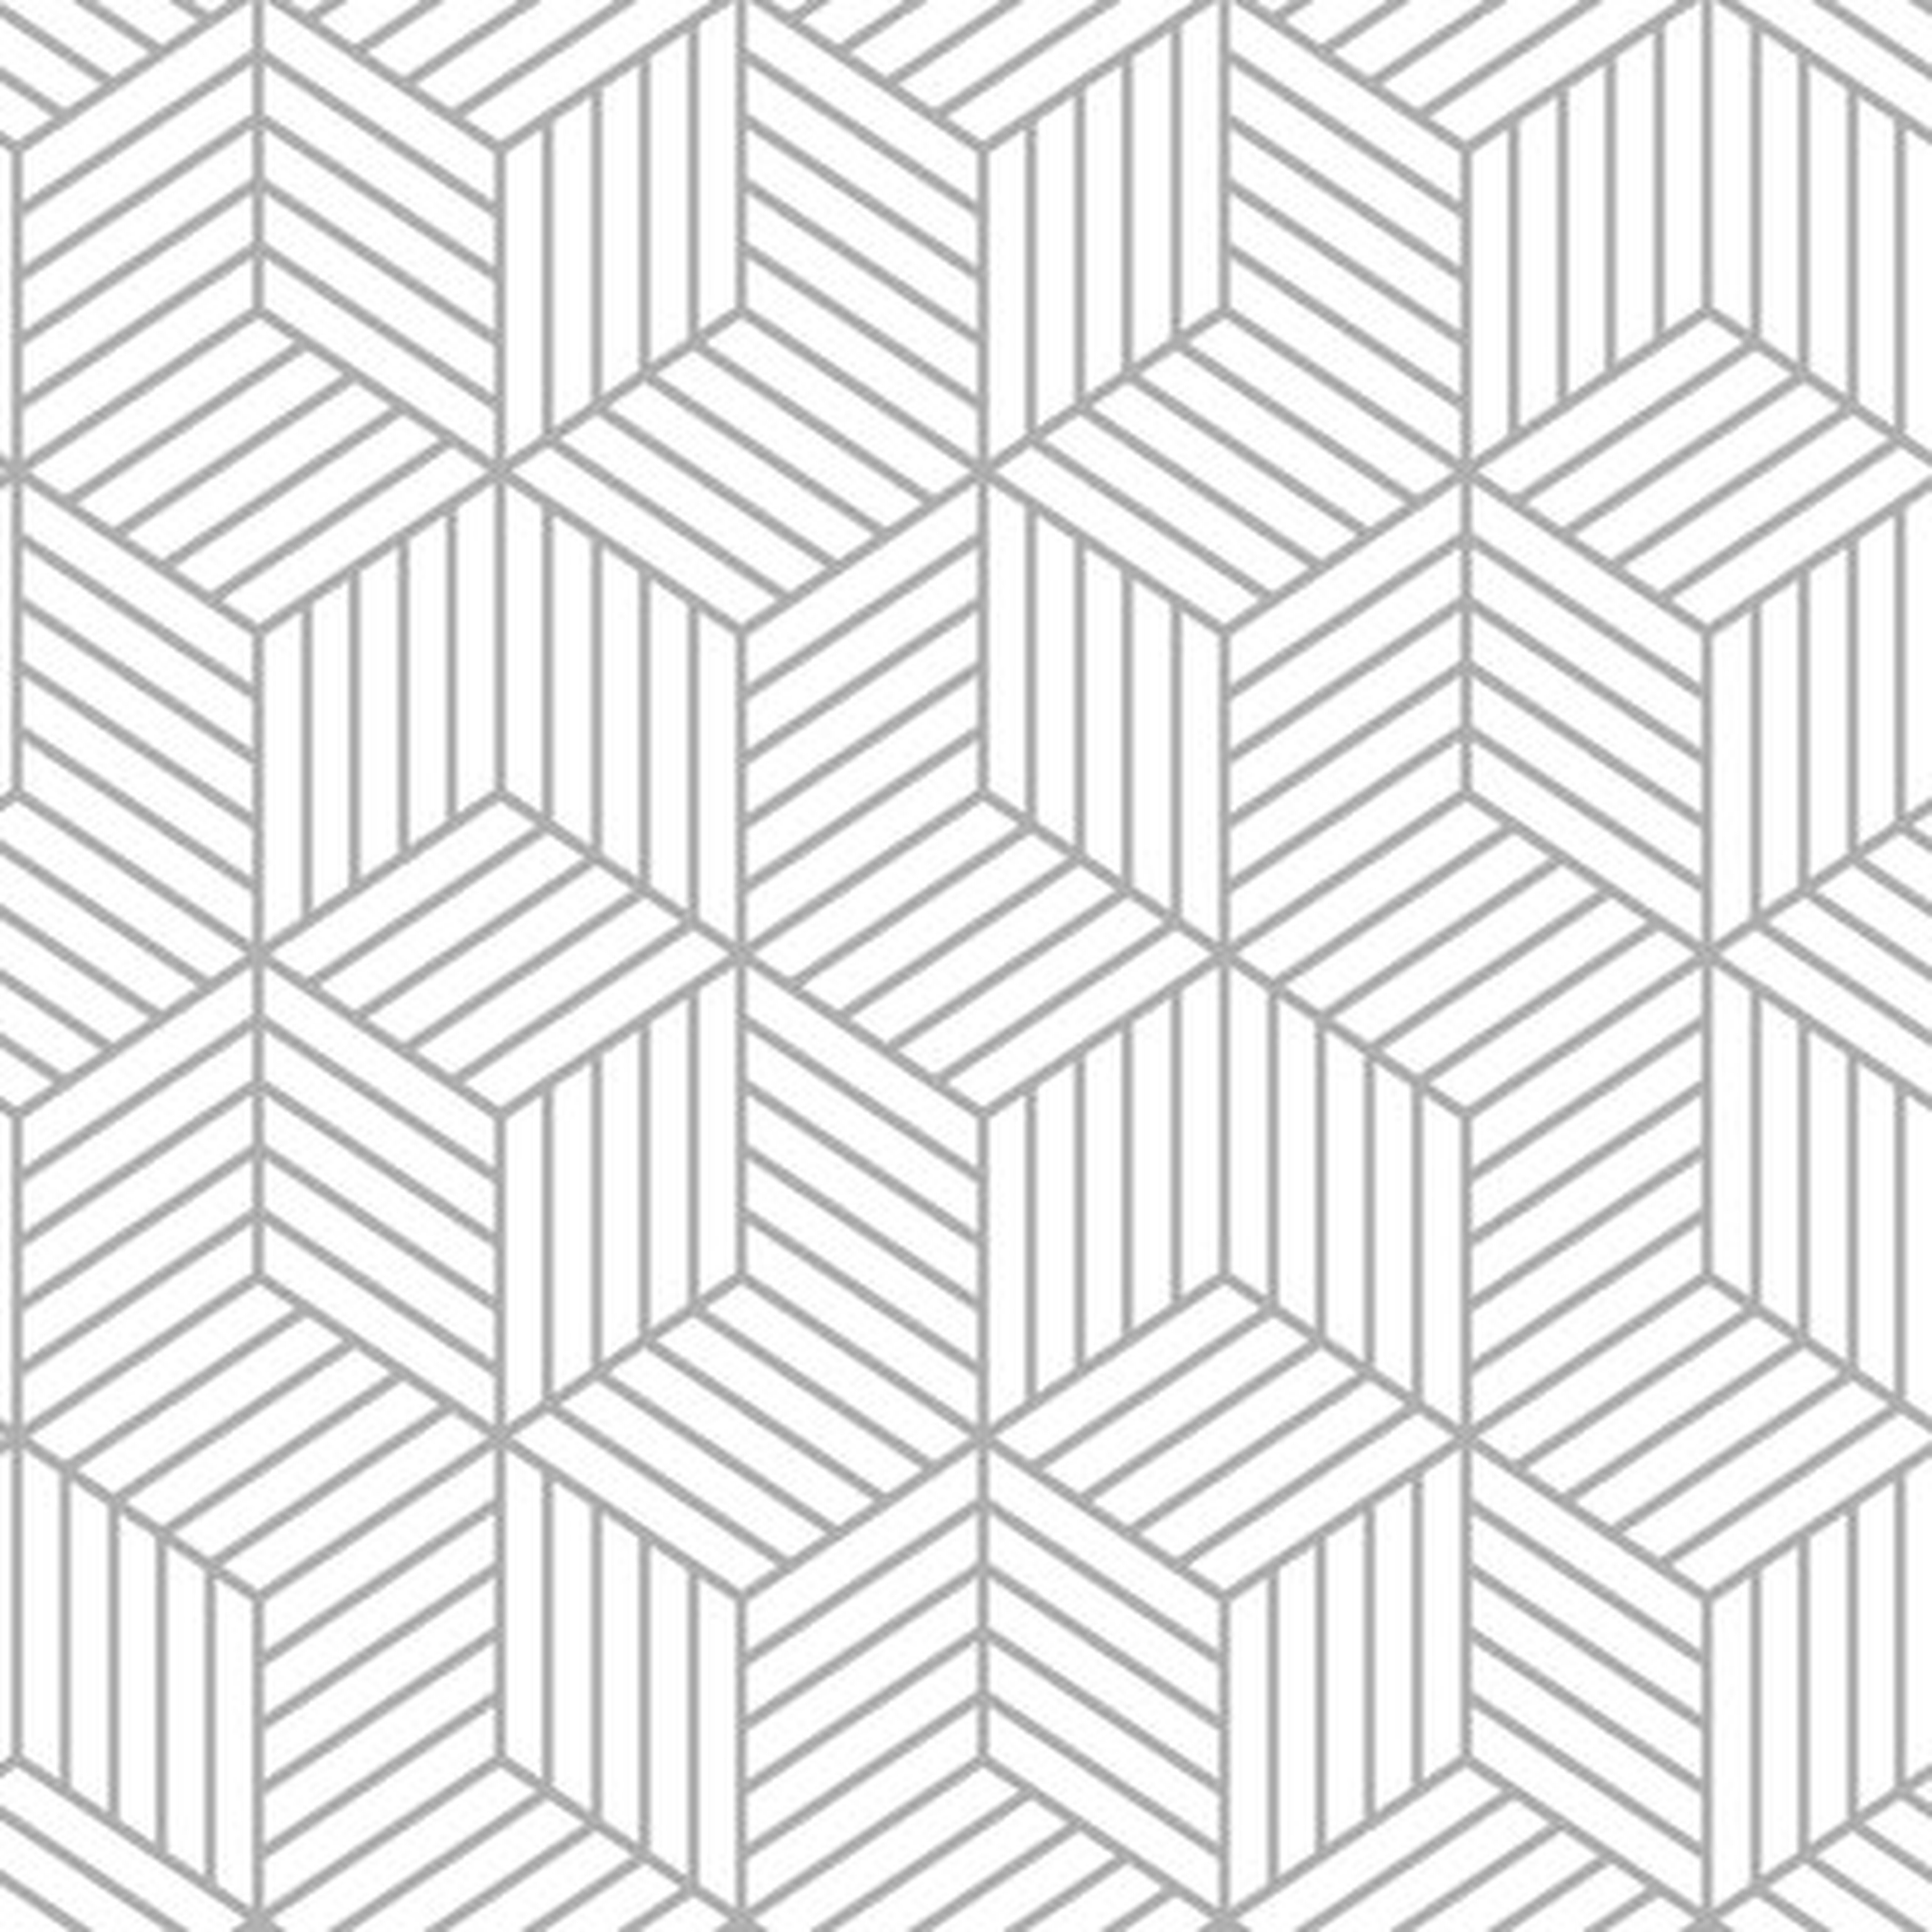 Rumsey Striped Hexagon 16.5' L x 20.5" W Geometric Peel and Stick Wallpaper Roll - AllModern